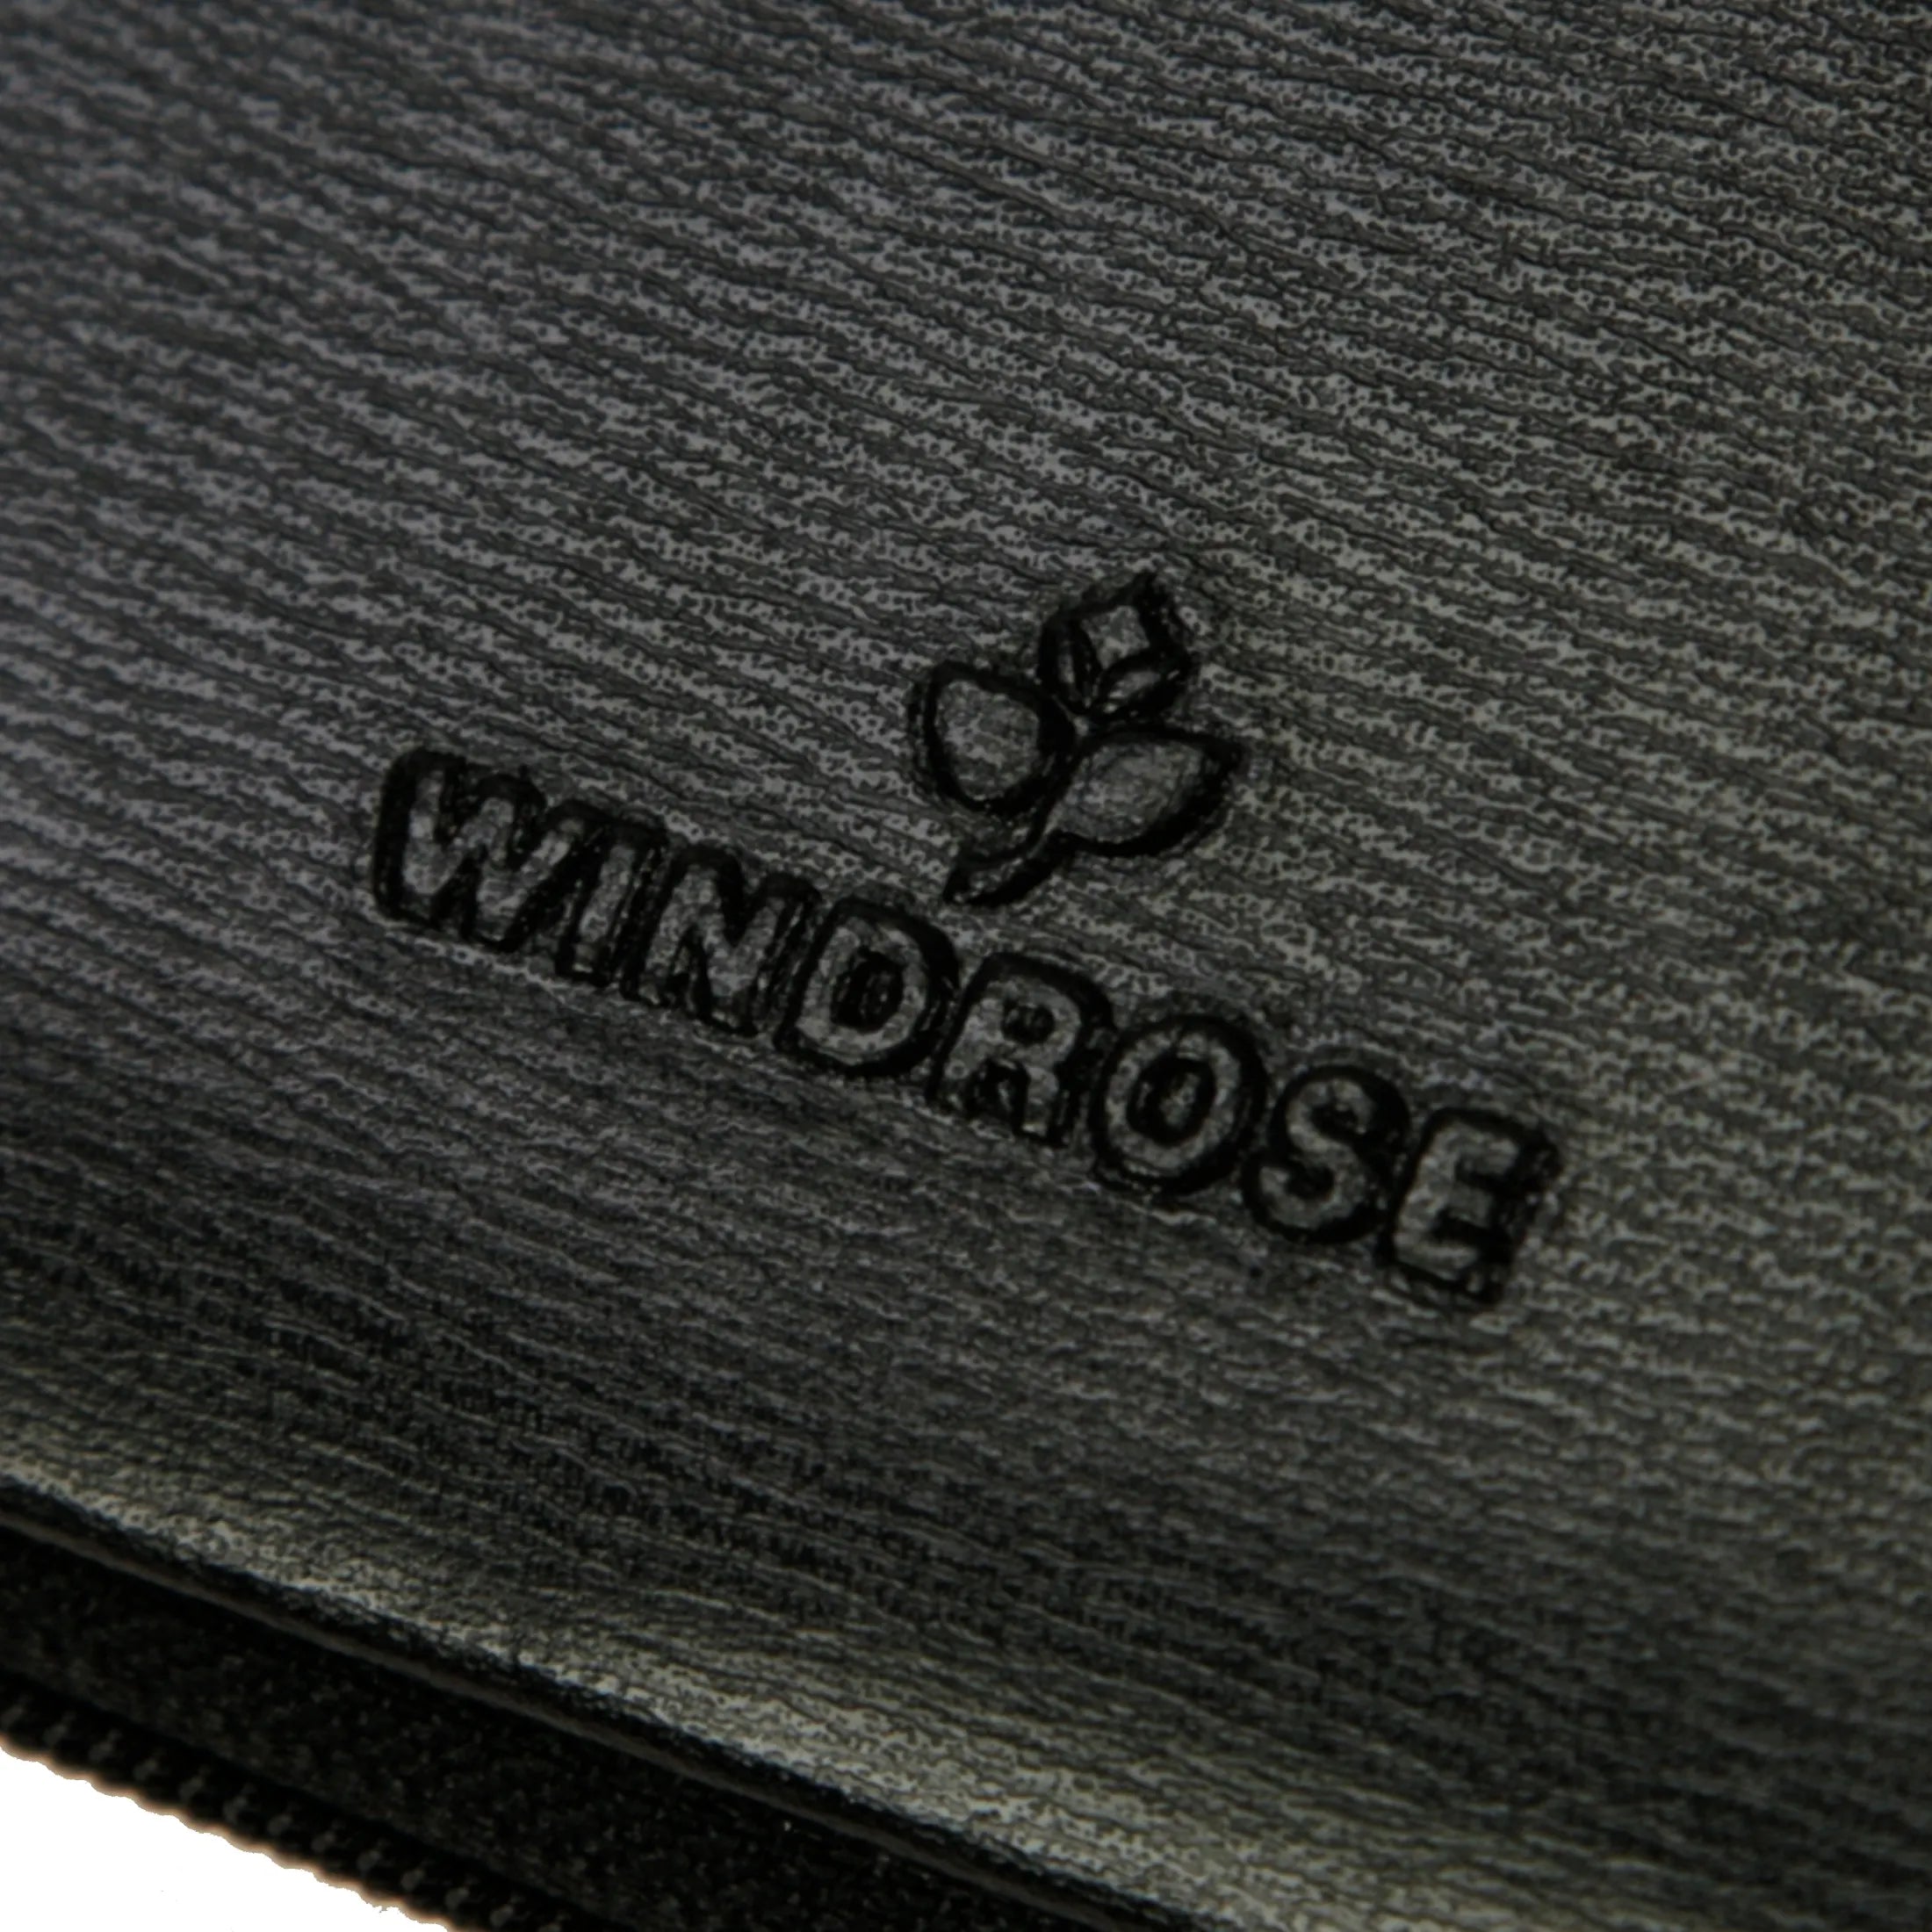 Windrose Ambiance Manicure leather zipper case - black